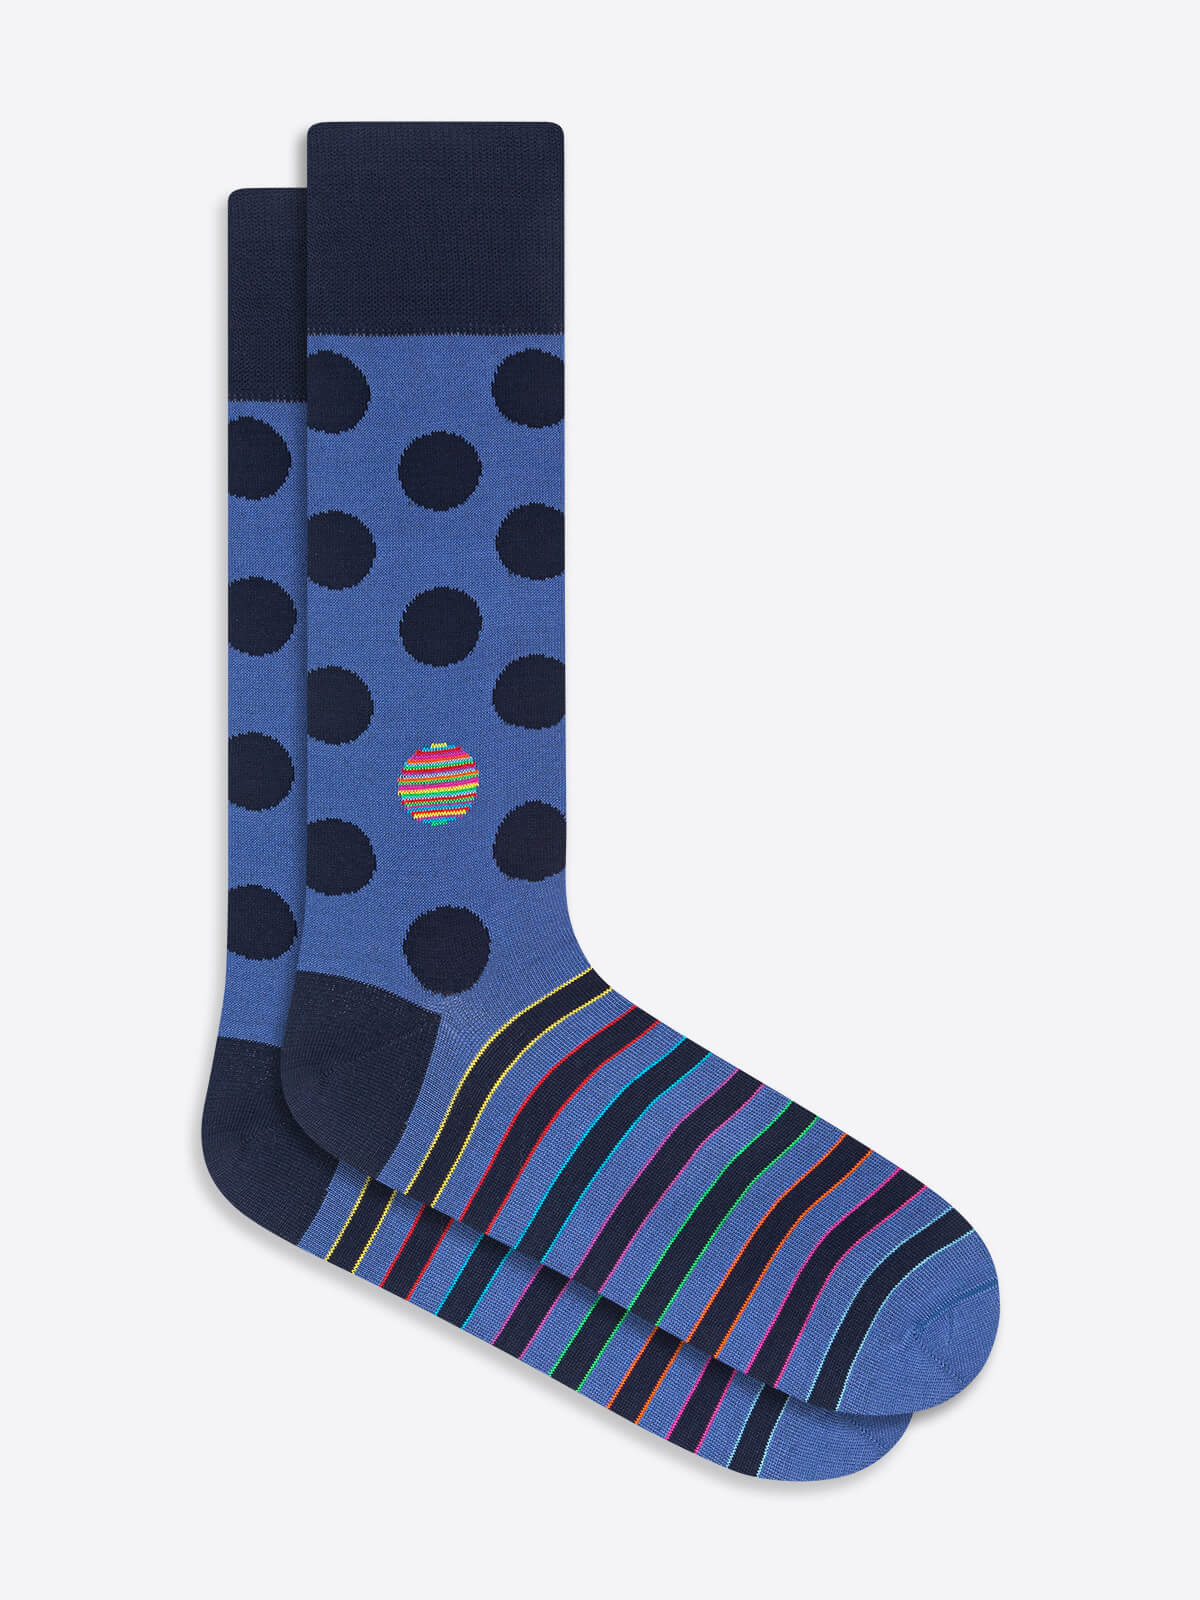 Dot and Stripe Mid-Calf Socks